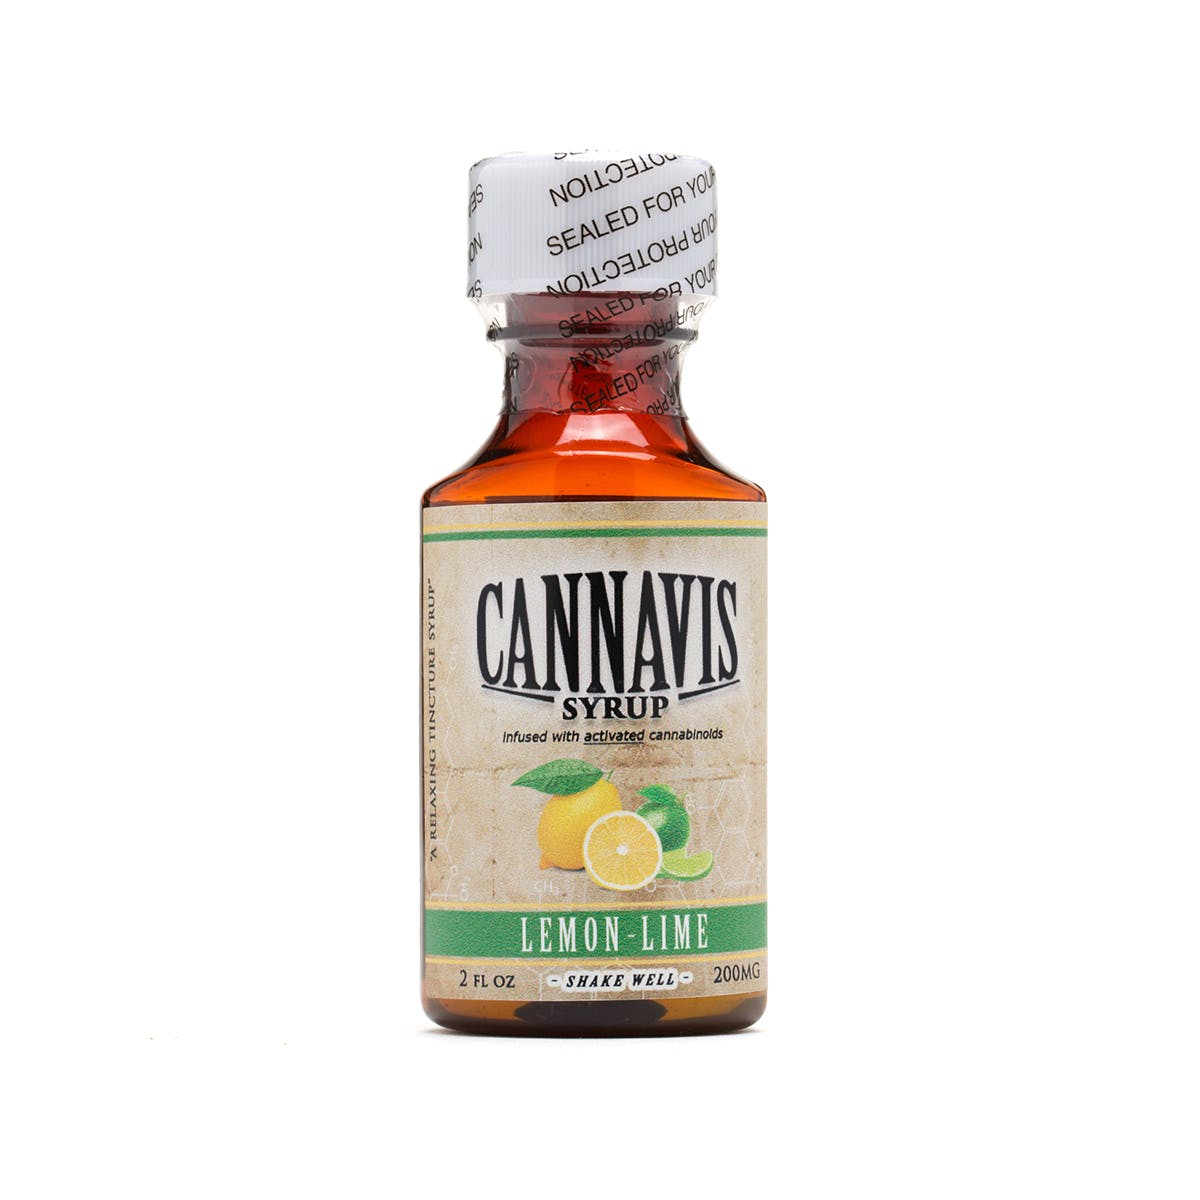 Cannavis Syrup, Lemon-Lime 200mg